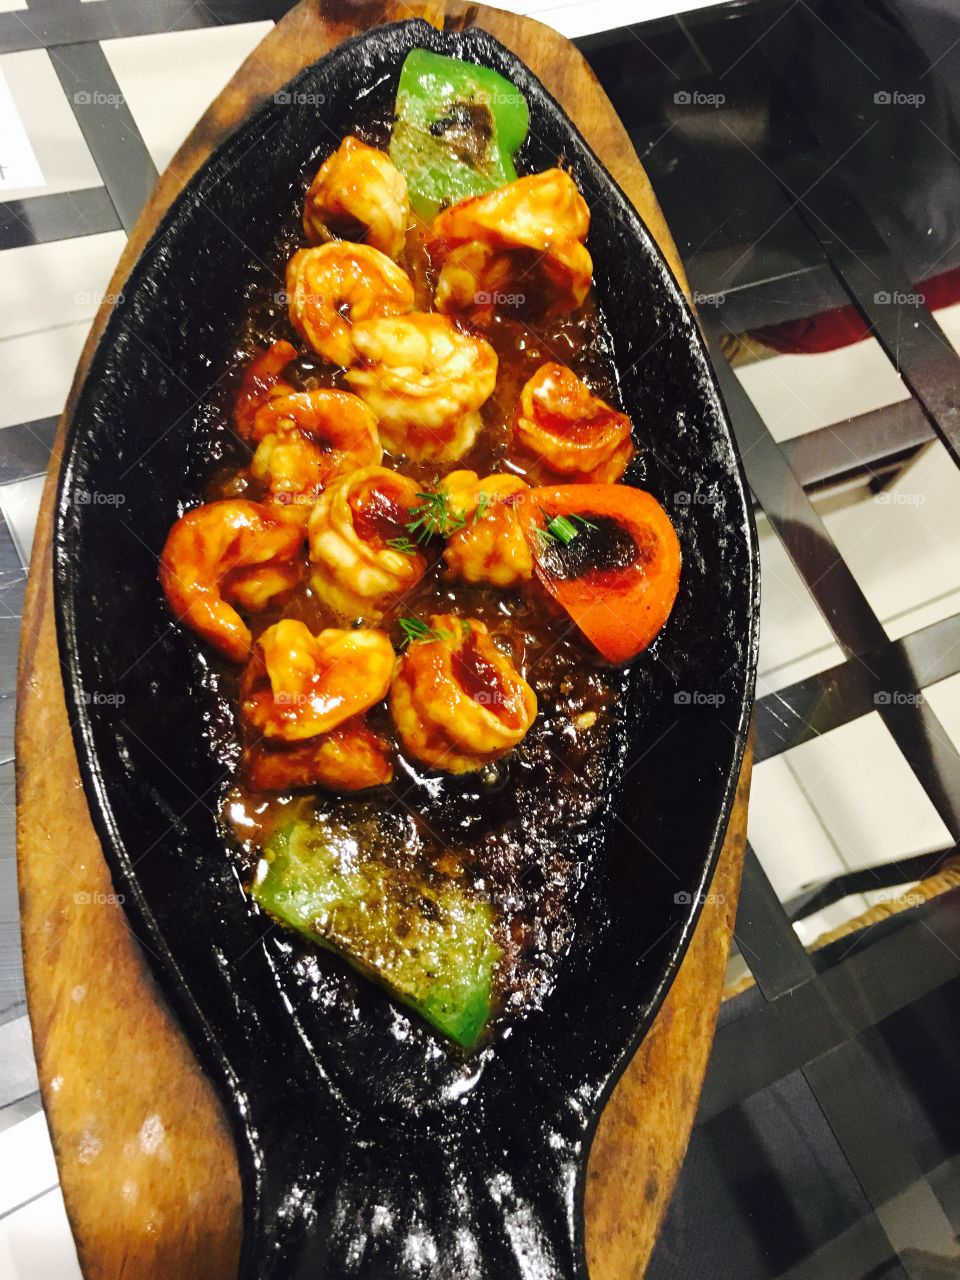 Shrimp barbecue 🍤 #LoveForSeafood